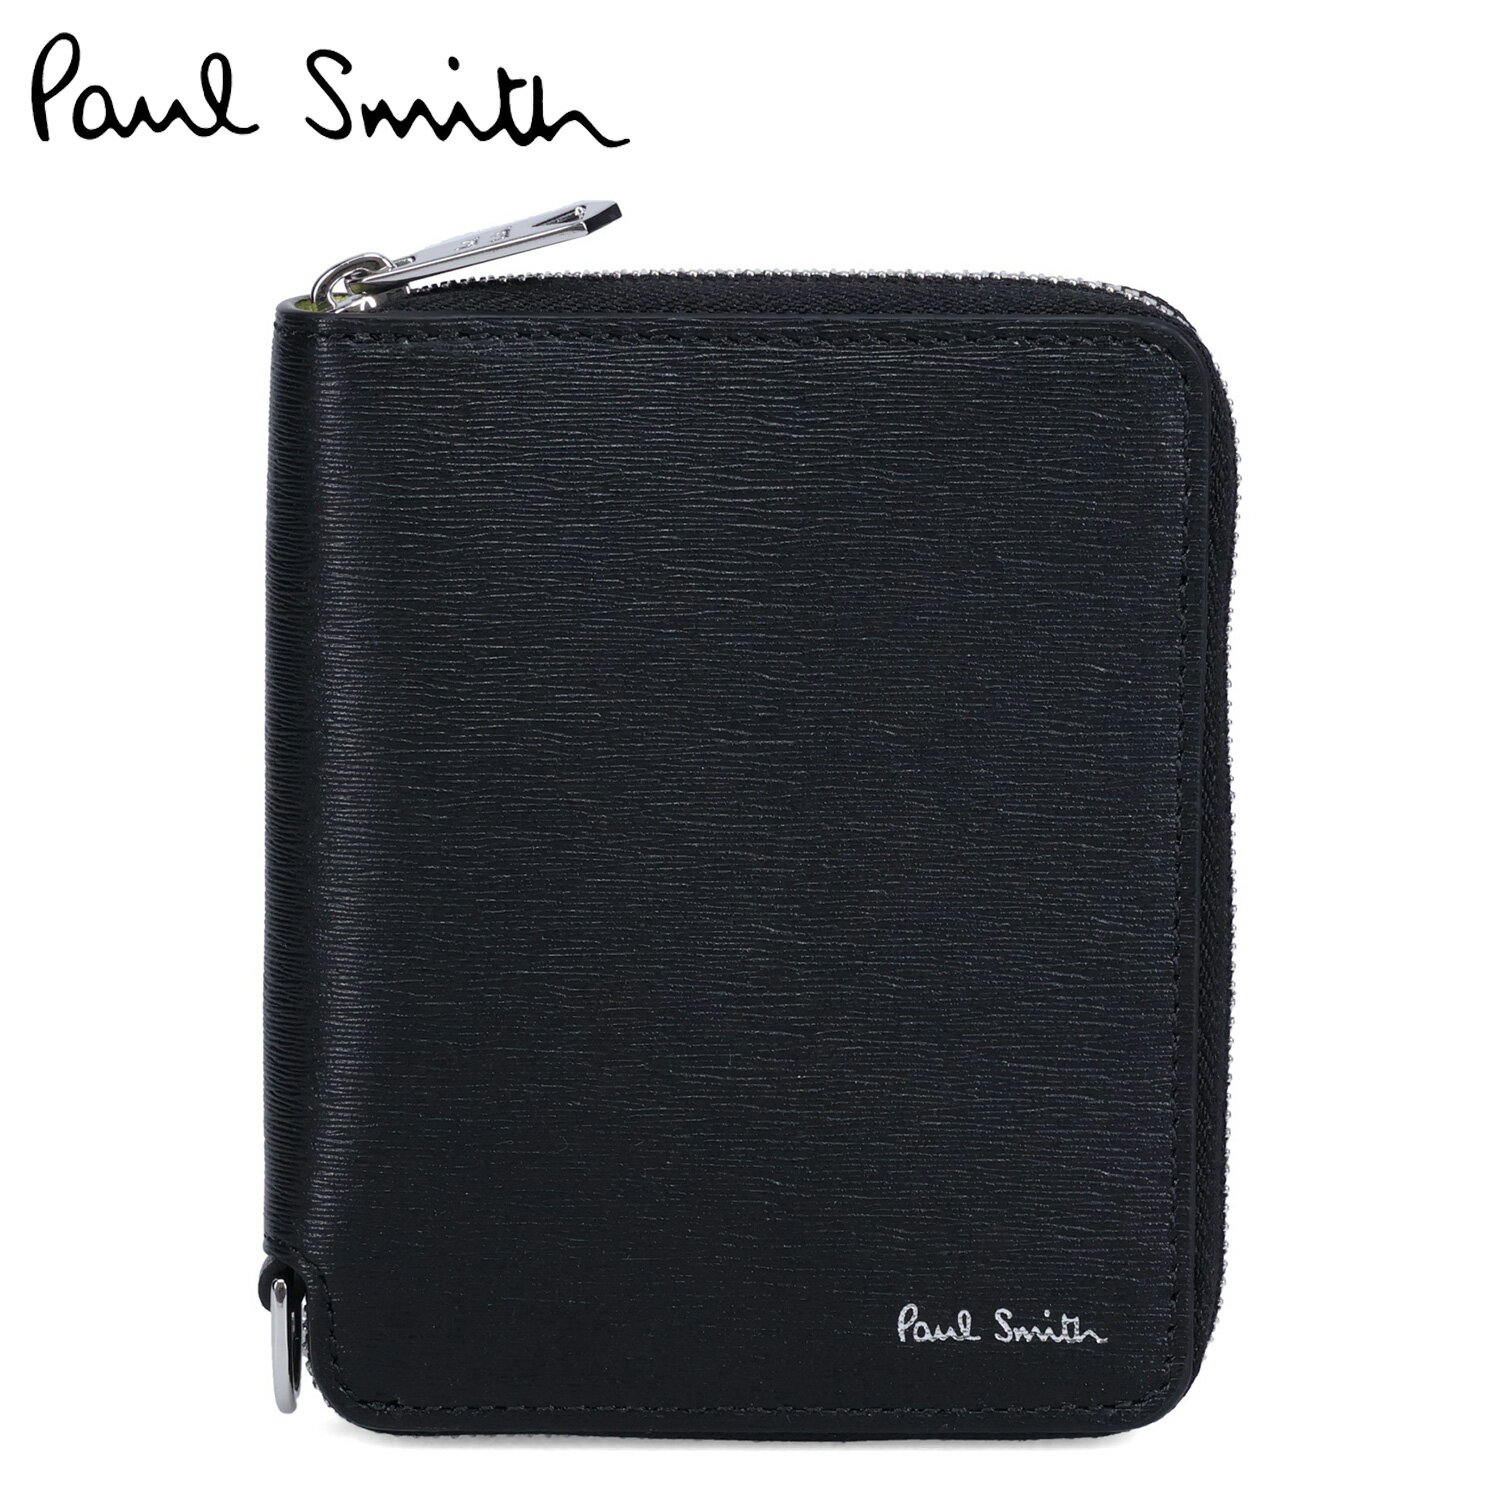 Paul Smith WALLET ZIP BFOLD ポールスミス 財布 二つ折り財布 メンズ 本革 ラウンドファスナー ブラック 黒 M1A-6702-KSTRGS